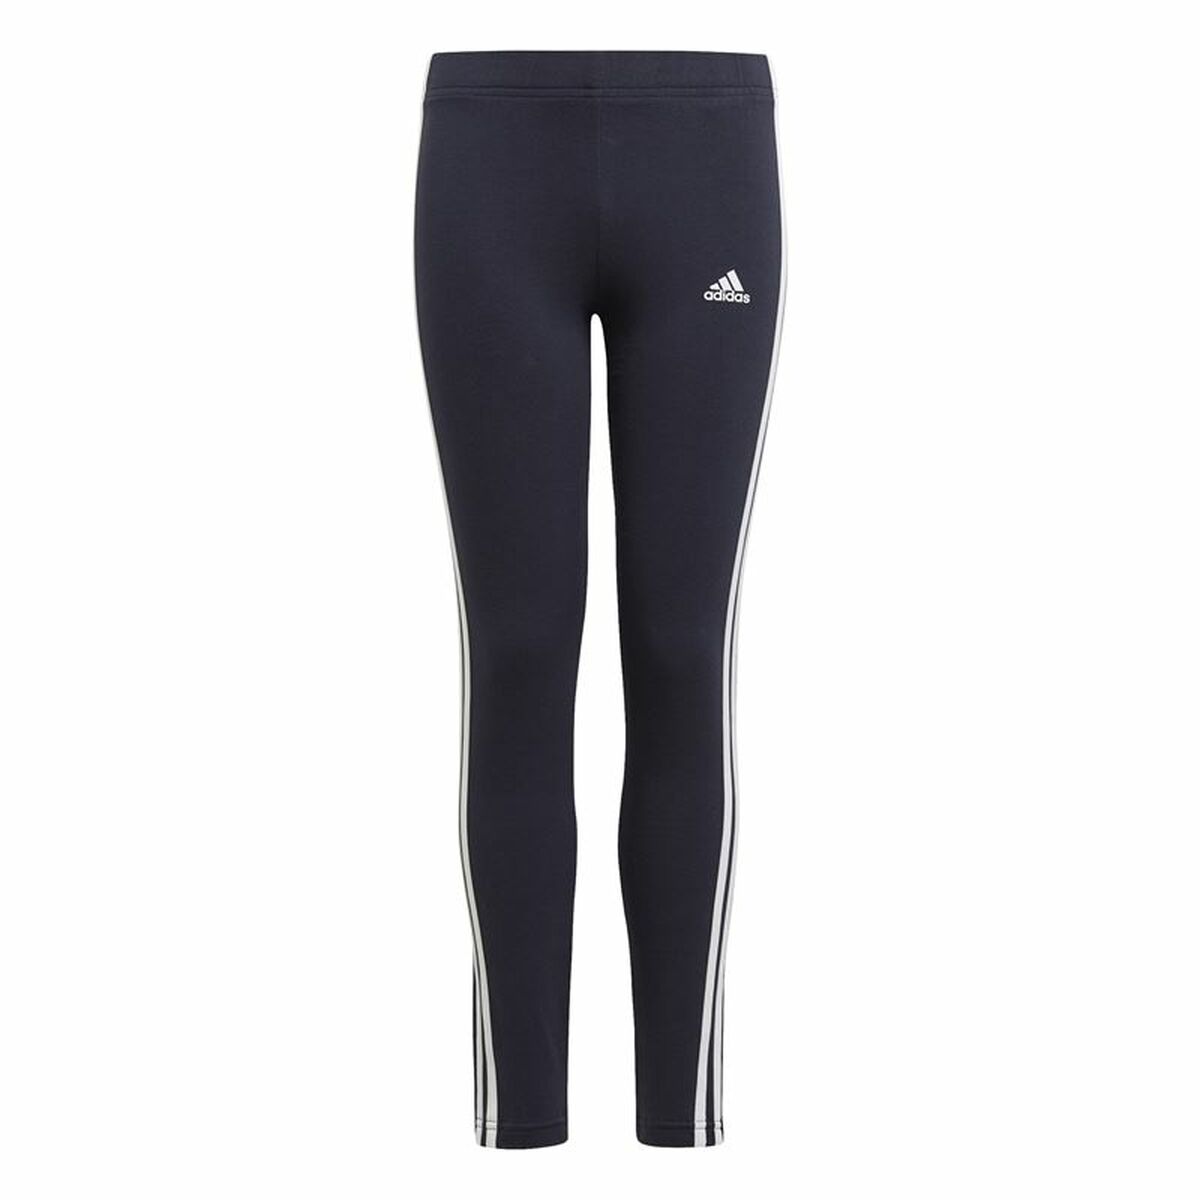 Colanți Sport Adidas Essentials 3 Stripes Bleumarin - Mărime 5-6 Ani